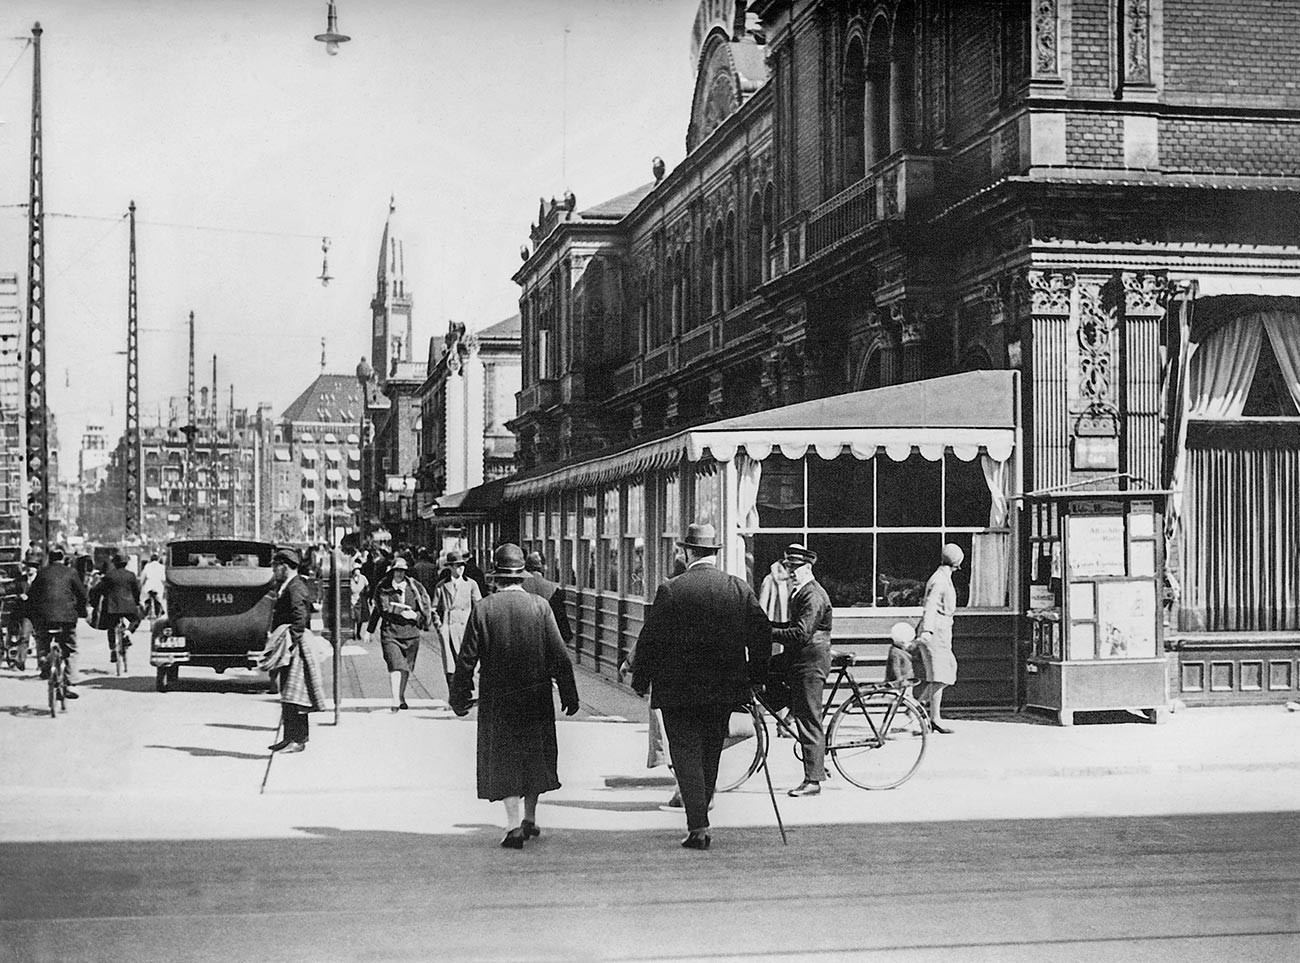 Copenhague, 1931

